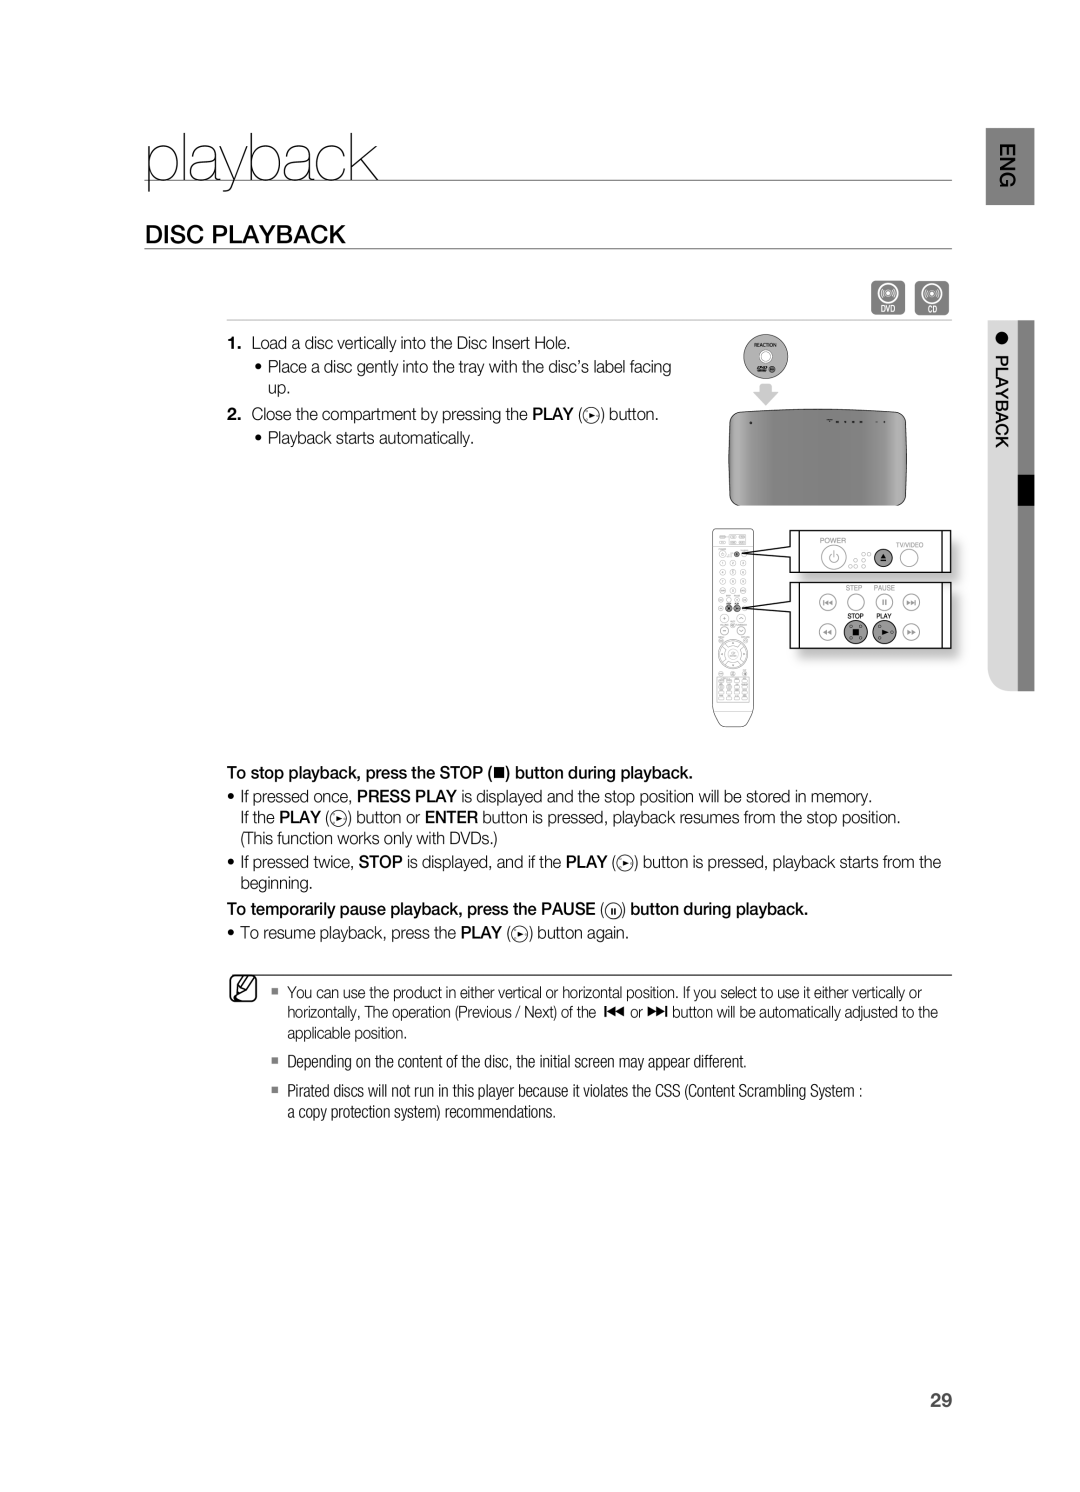 Samsung HT-TX715 user manual playback, Disc Playback 